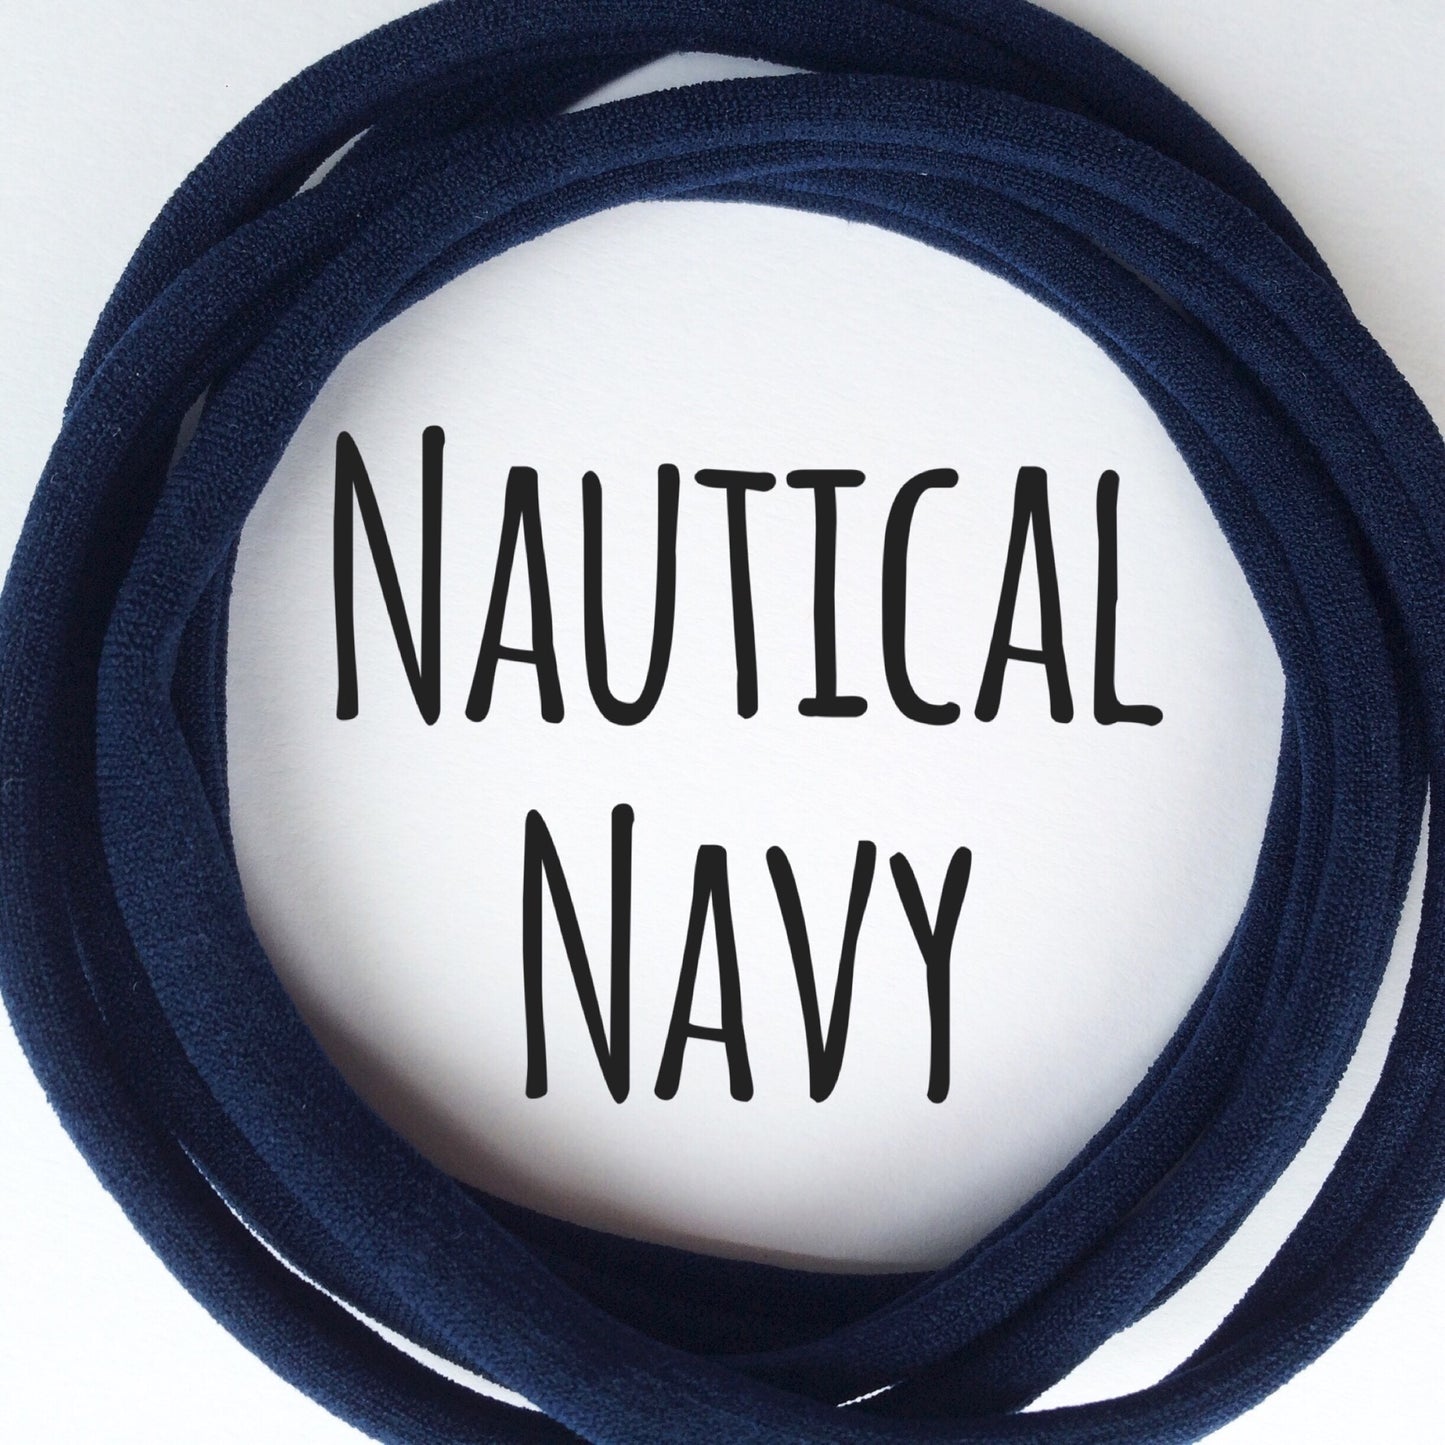 Nautical Navy - Dainties by Nylon Headbands - Rosie's Craft Shop Ltd